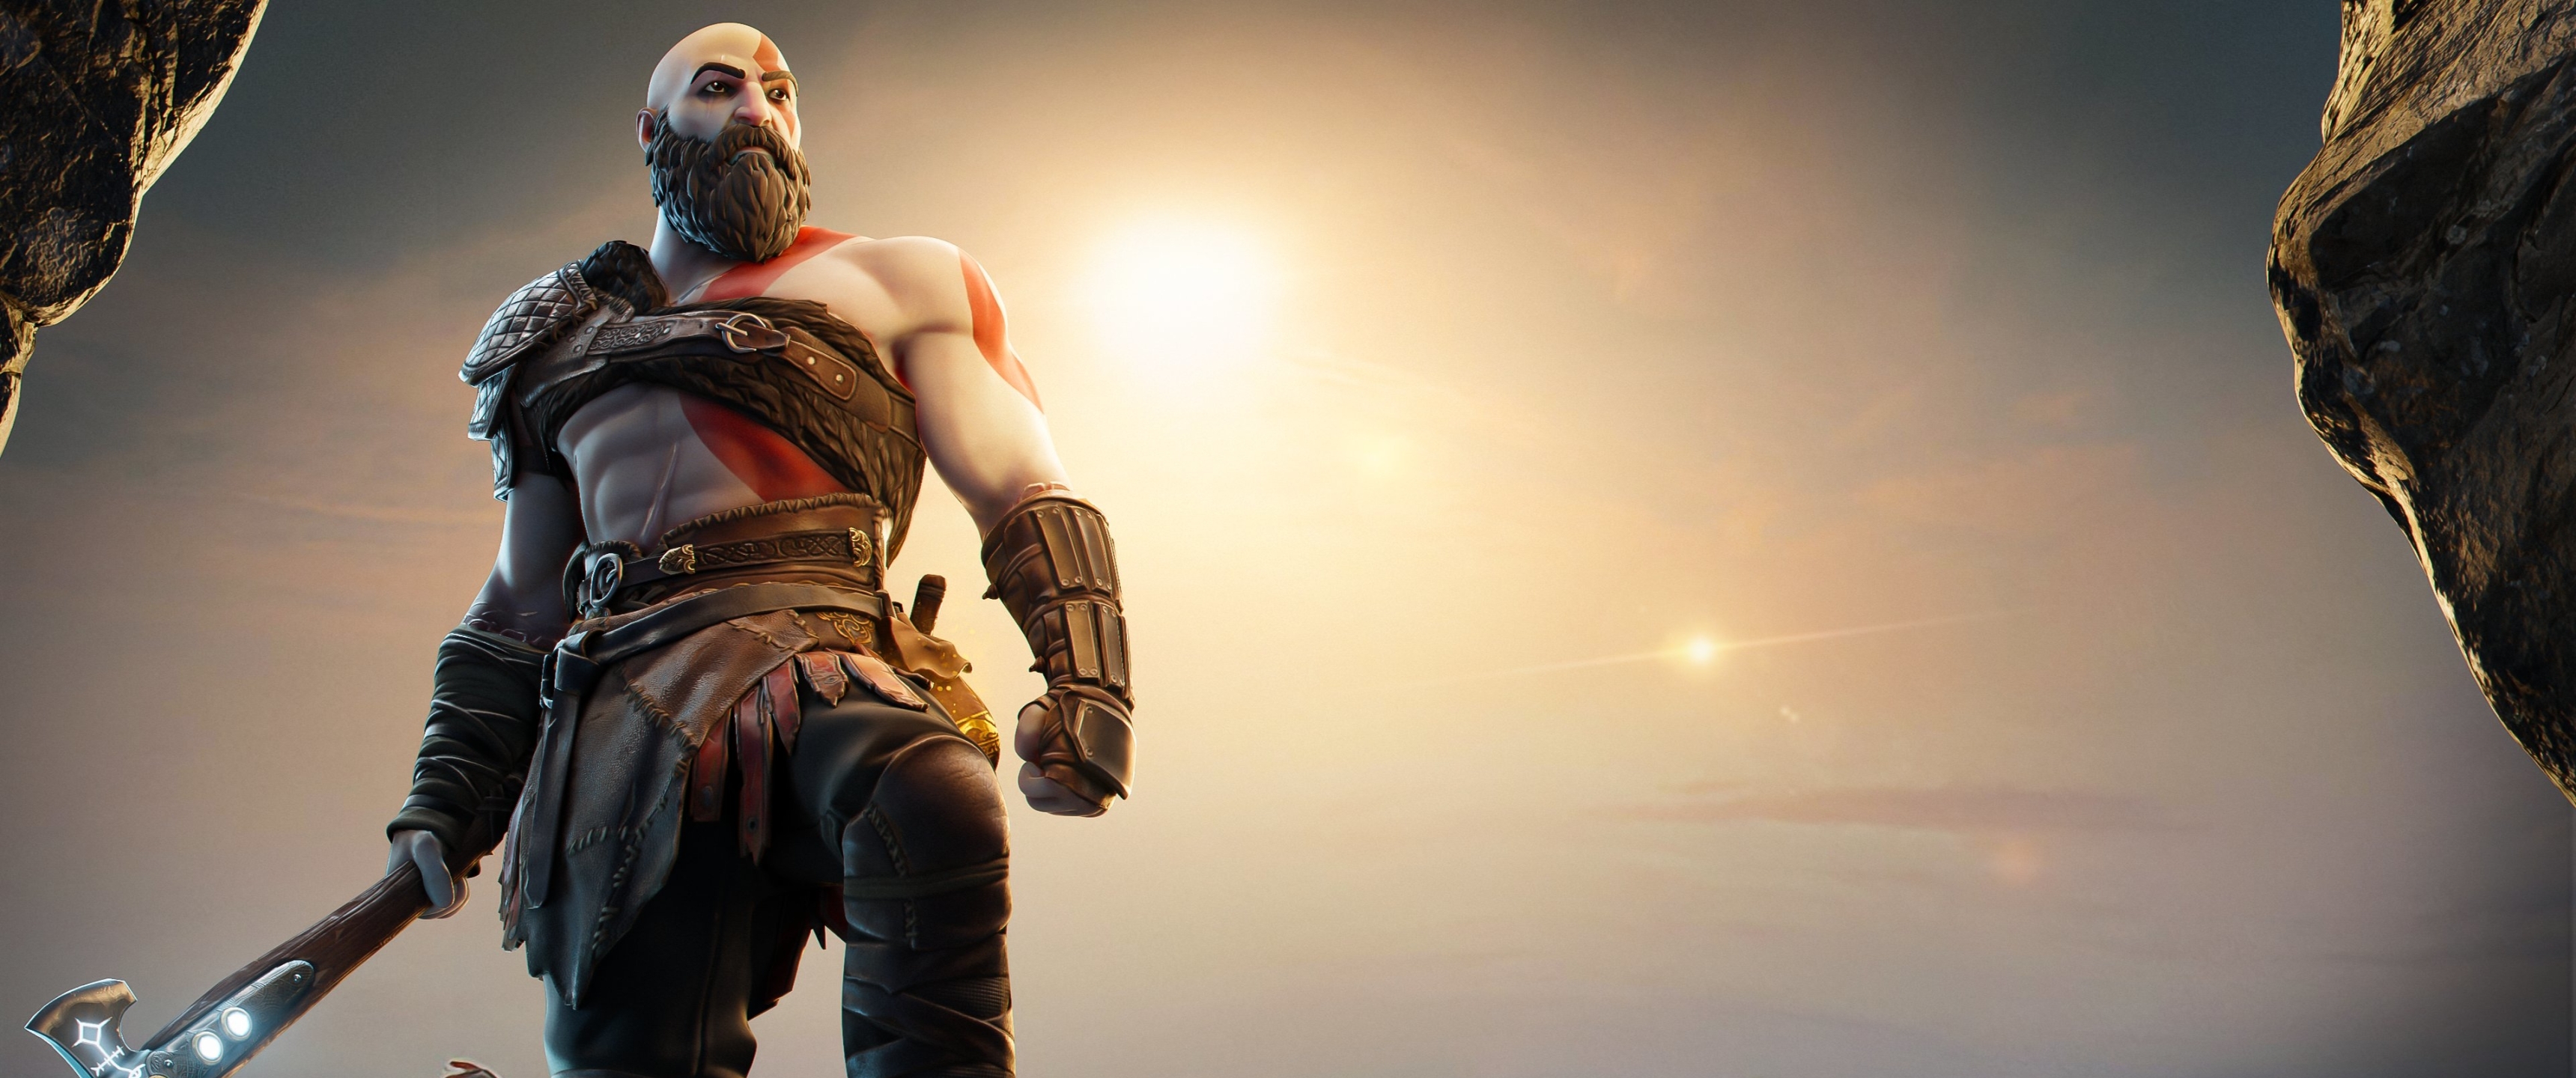 3440x1440 God Of War Kratos in Fortnite 3440x1440 Resolution Wallpaper ...